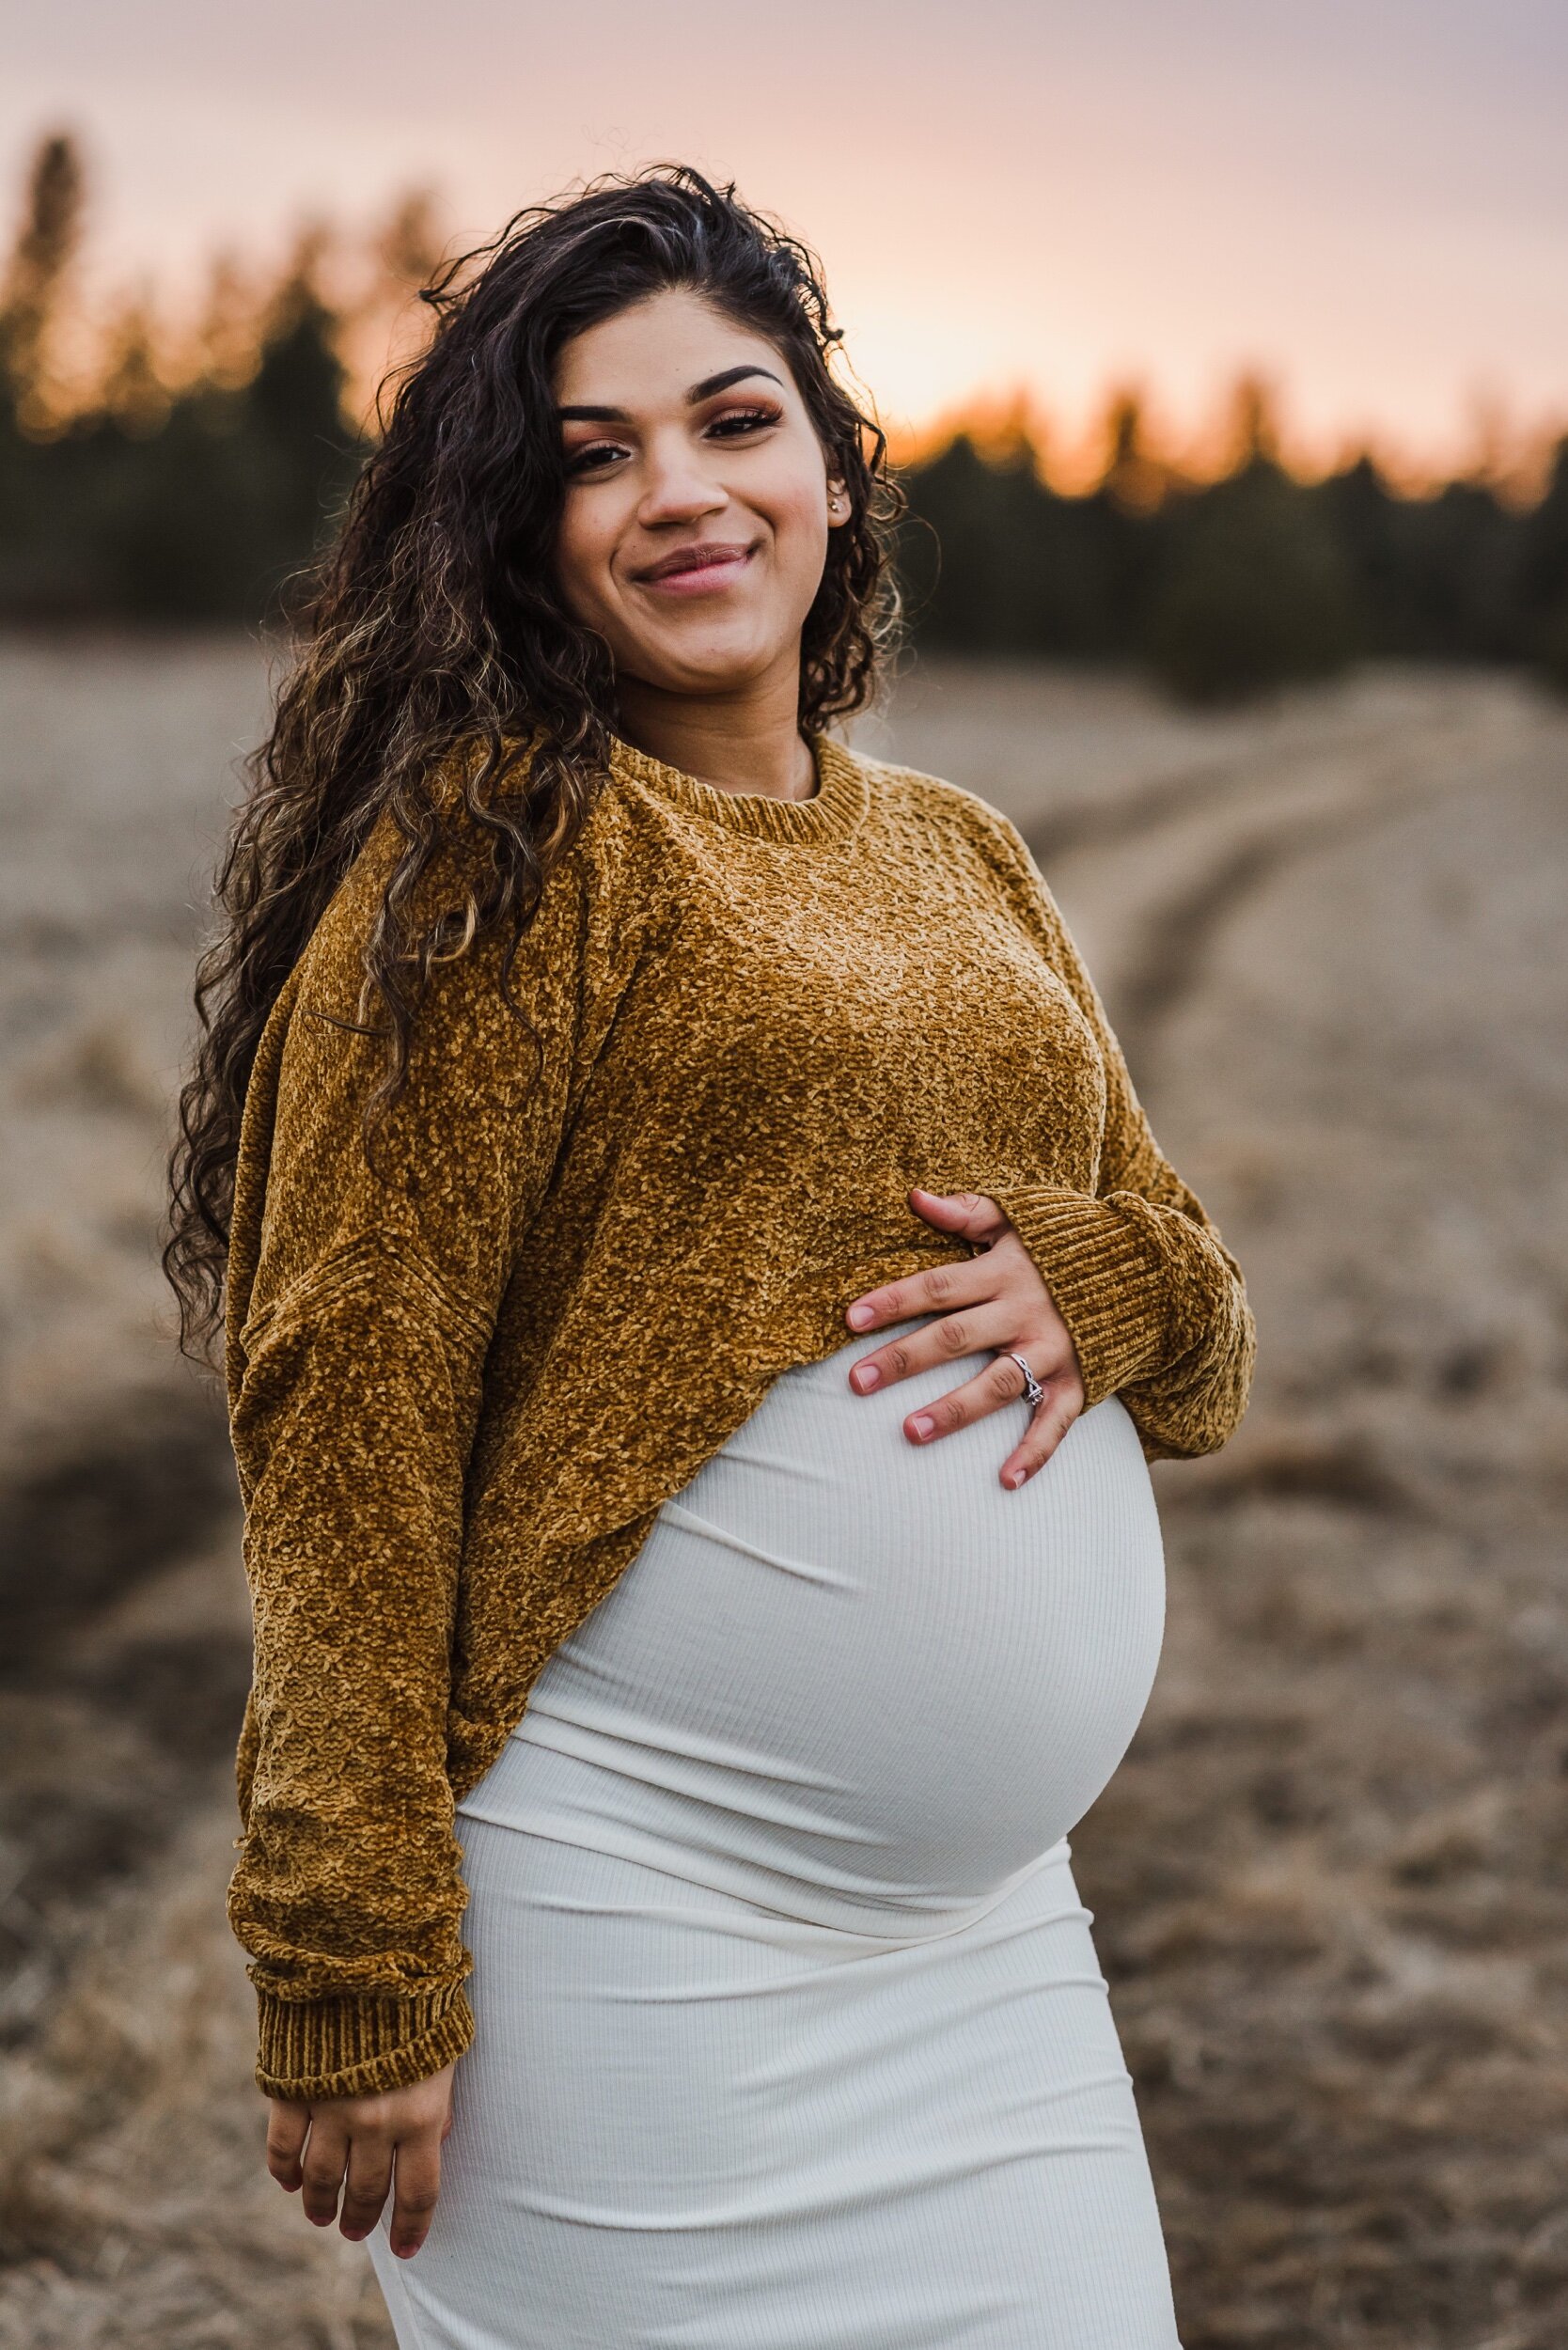 Spokane - Maternity Photographer - BaileyRileyPhoto - T + R-6.jpeg